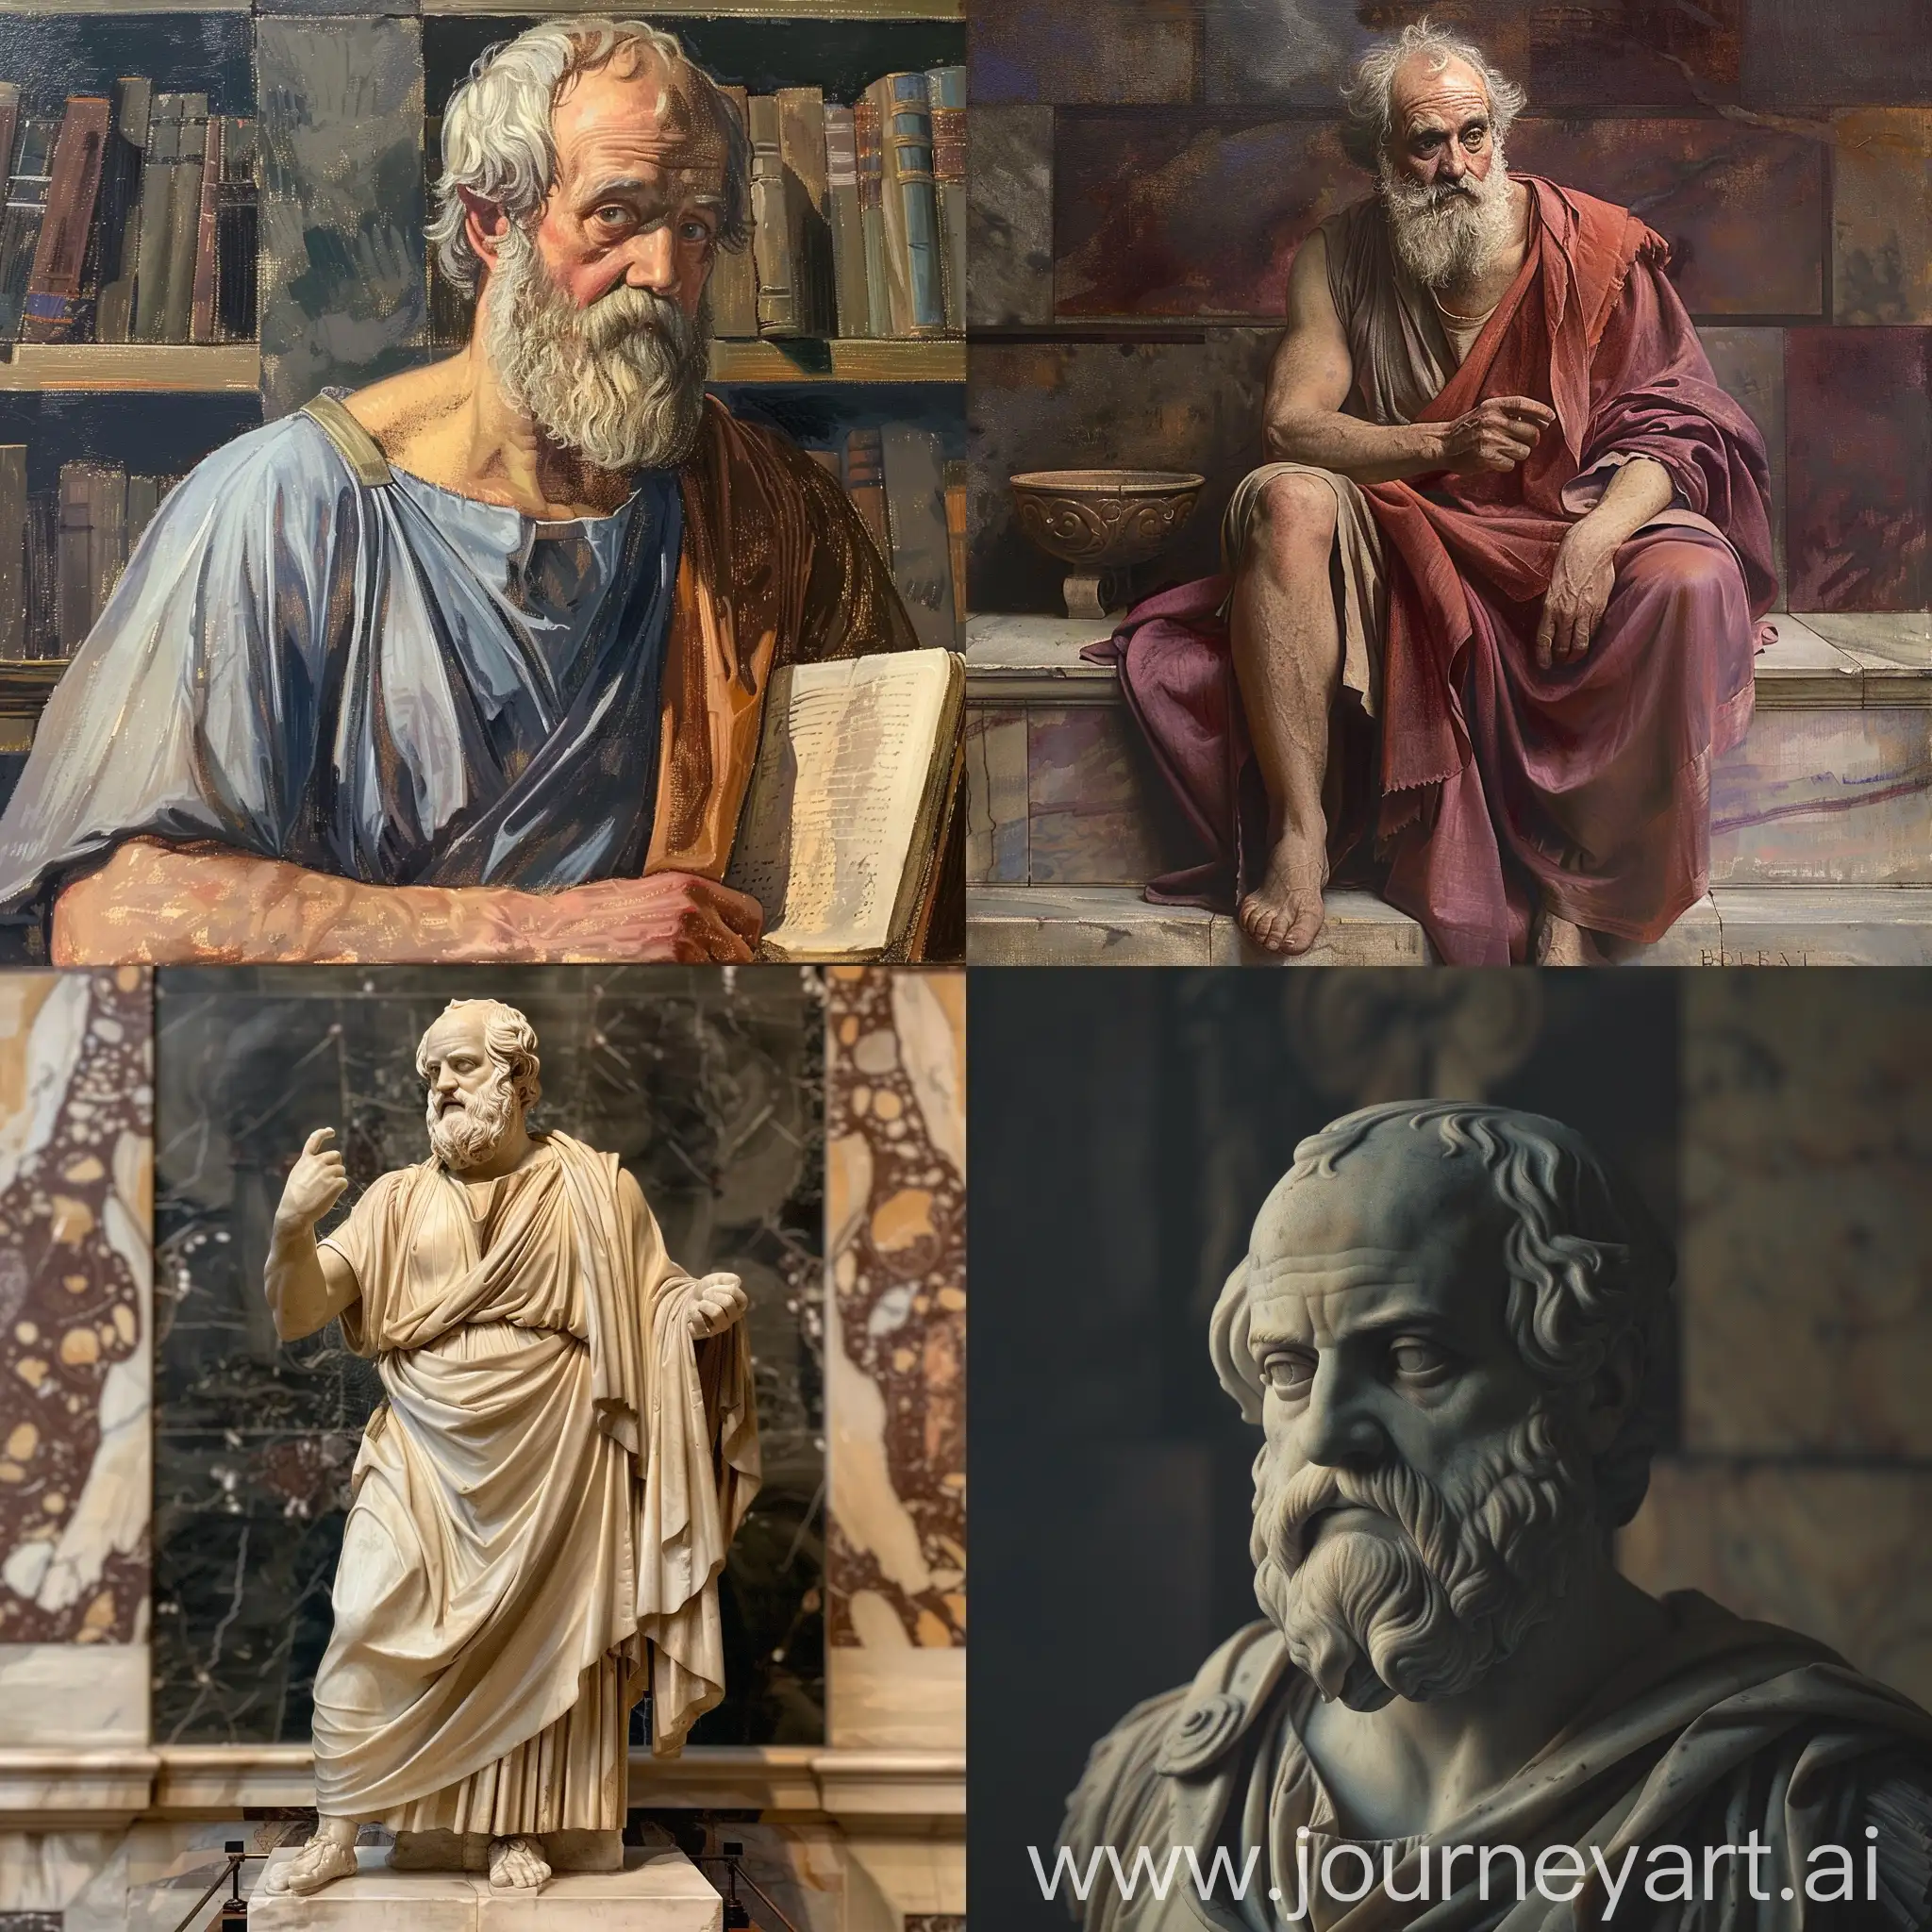 Aristotle-in-2020-AI-Art-Classical-Philosopher-in-Modern-Interpretation